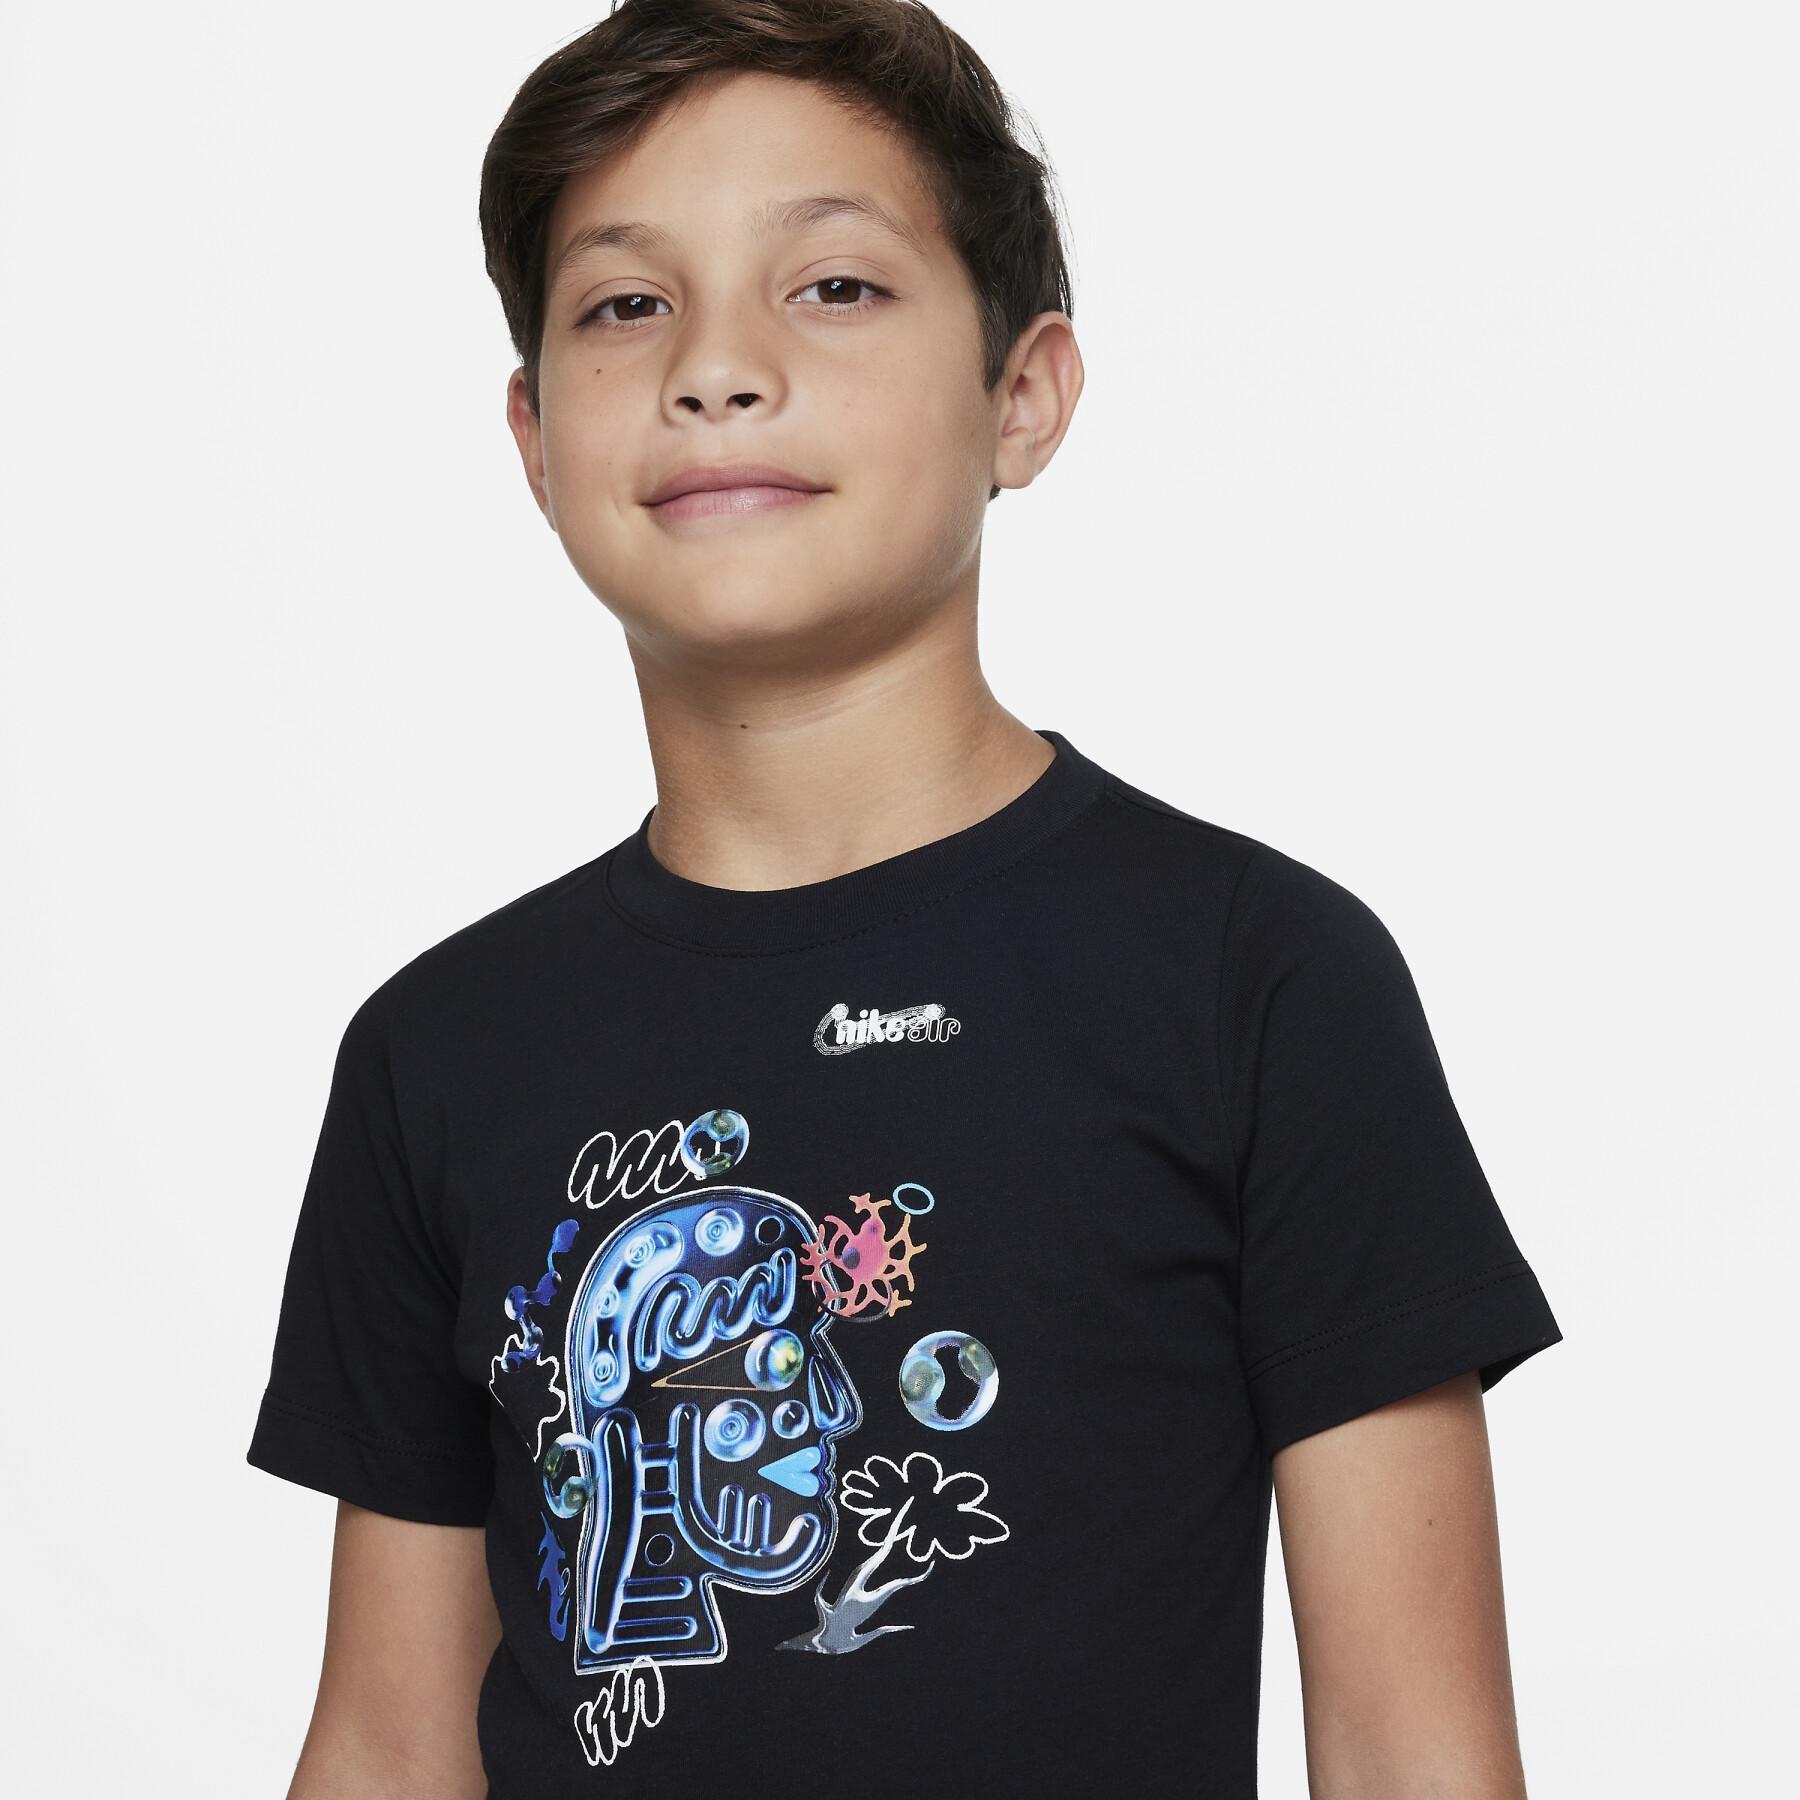 T-shirt för barn Nike Air Max Day